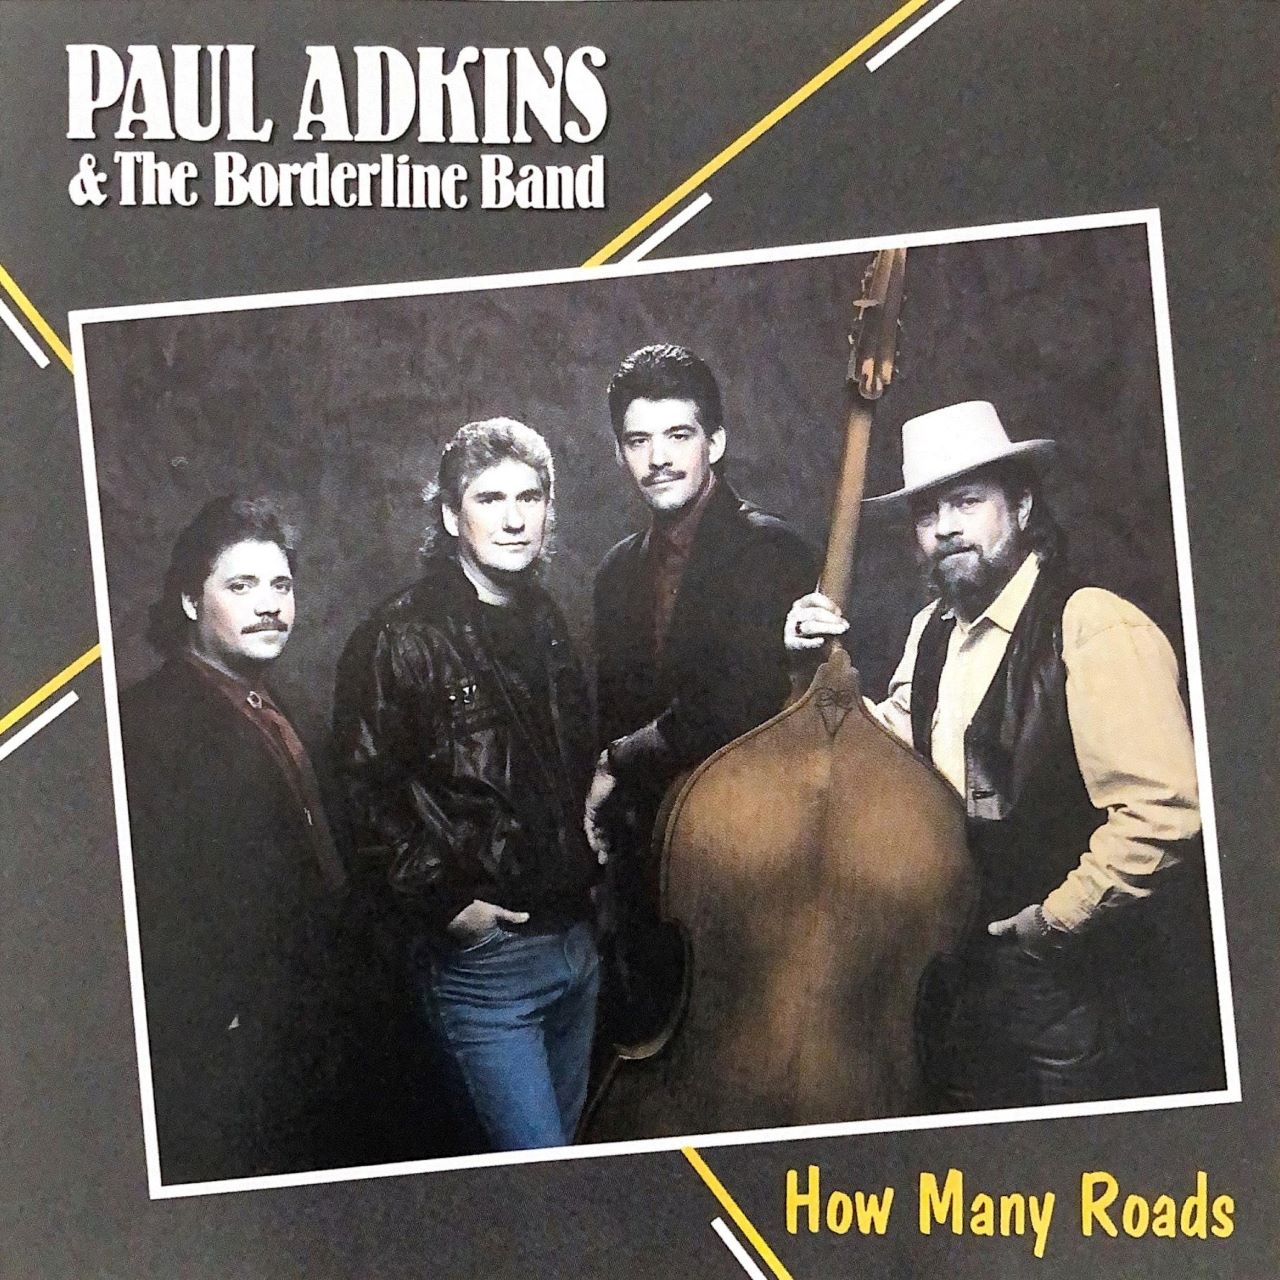 Paul Adkins & The Borderline Band - How Many Roads cover album